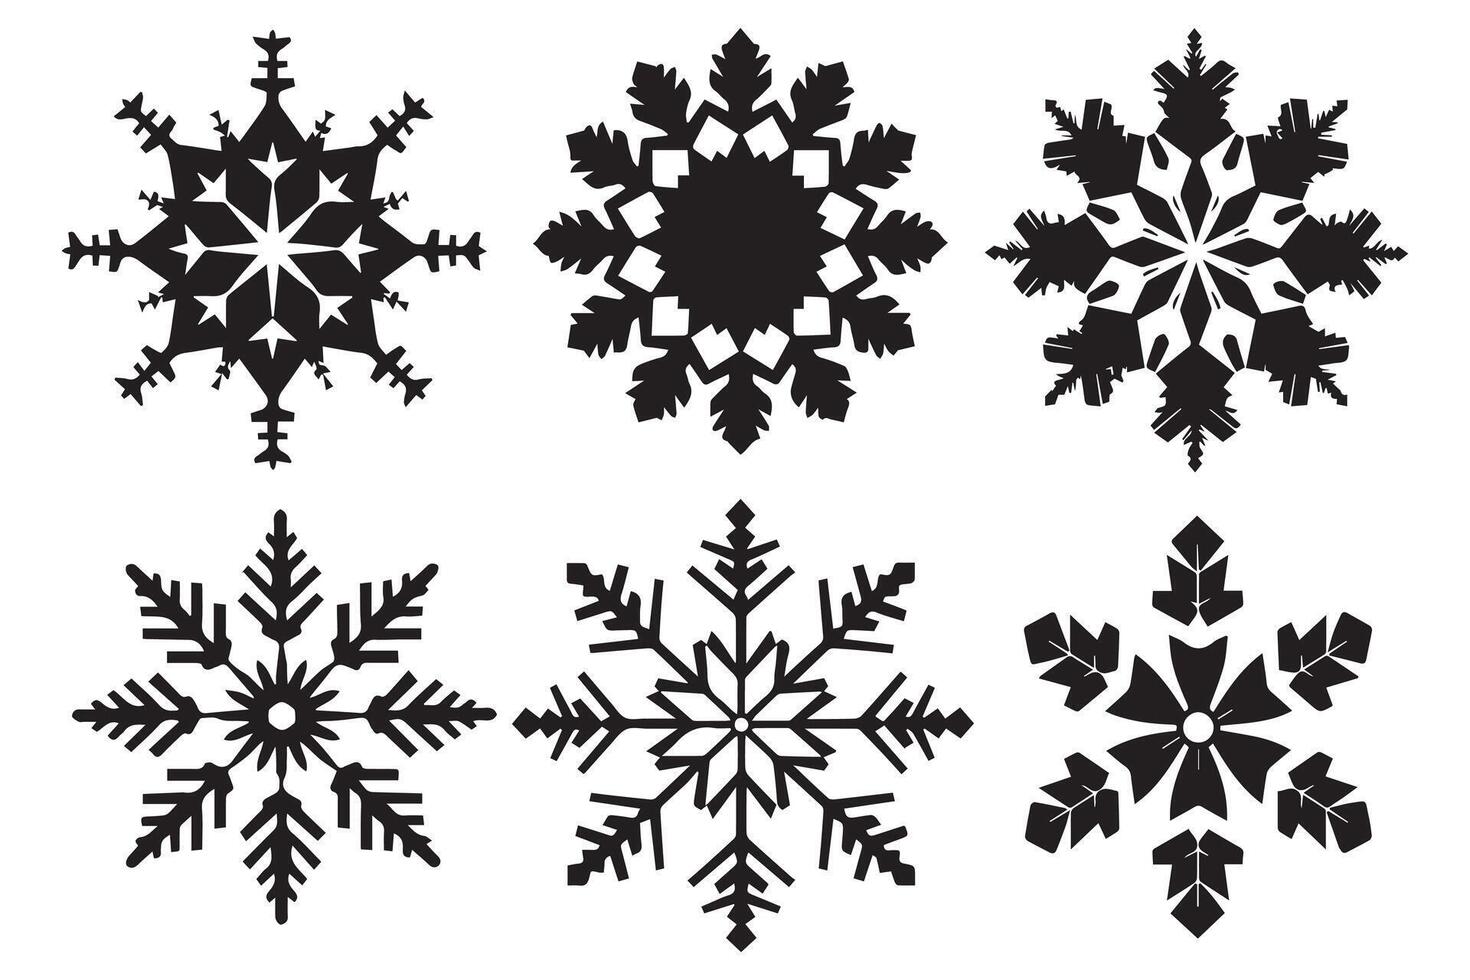 snöflinga vinter- svart silhuett på vit bakgrund vektor